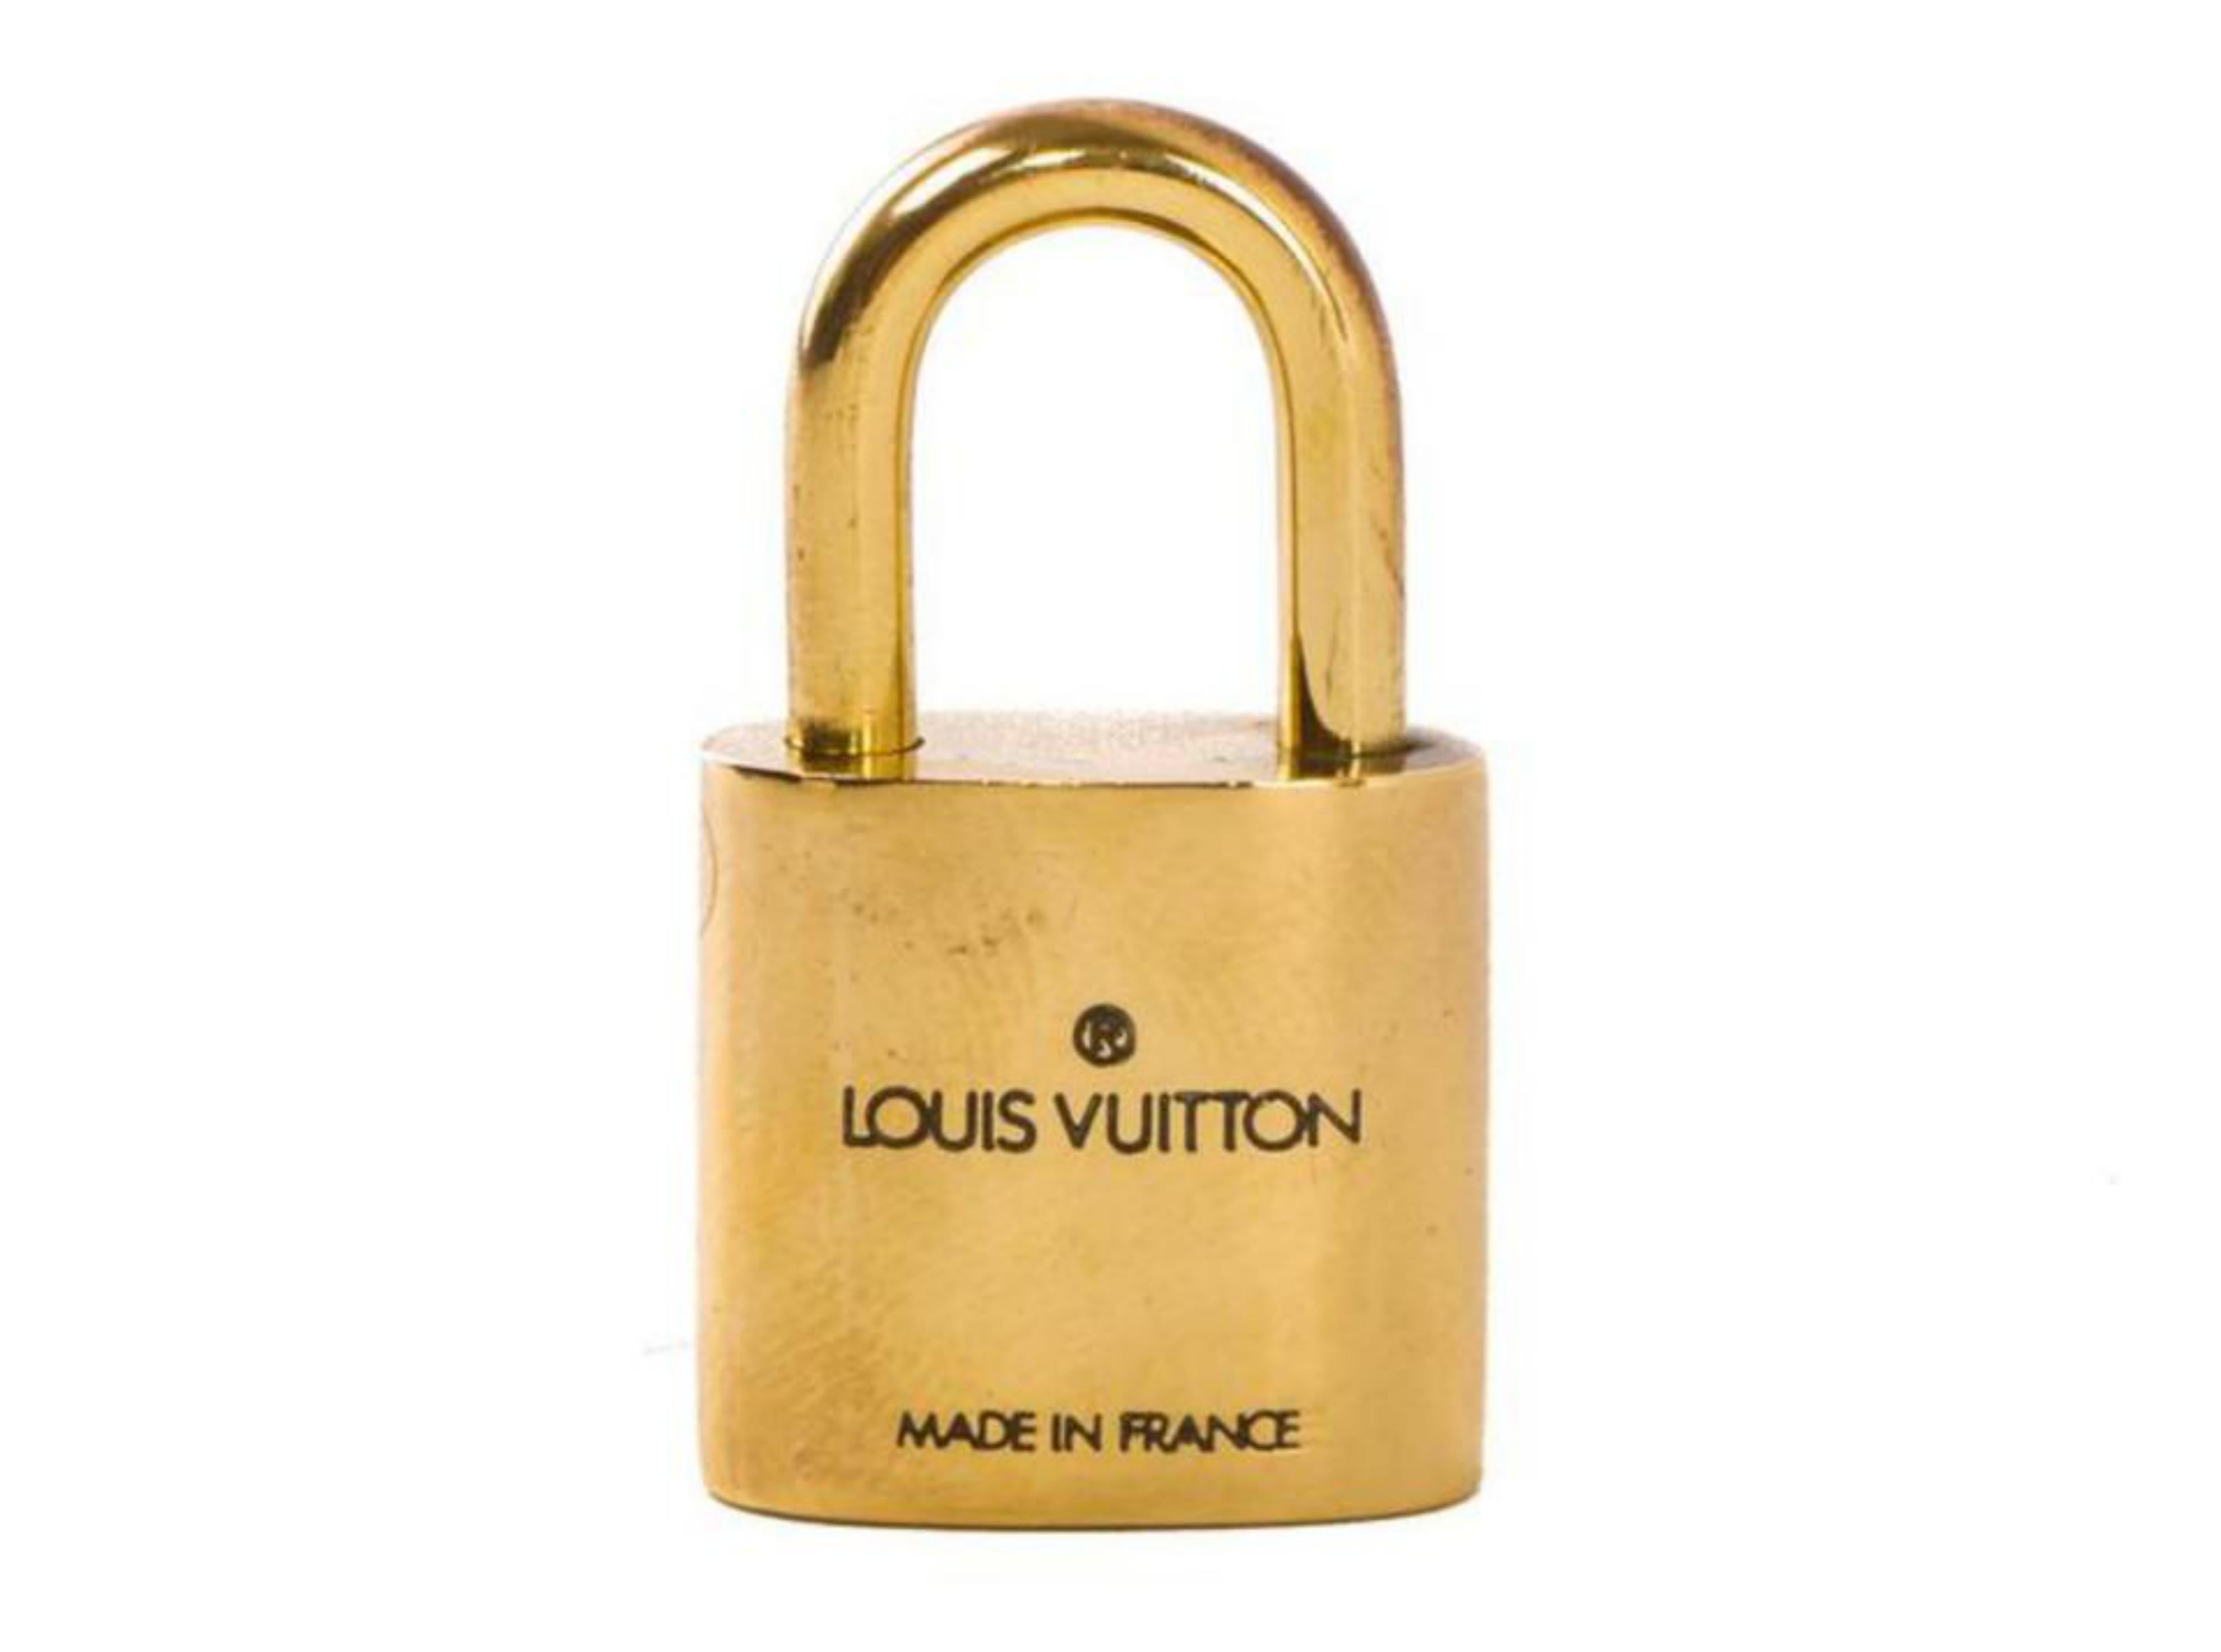 Louis Vuitton Gold Single Key Lock Pad Lock and Key 867565 2